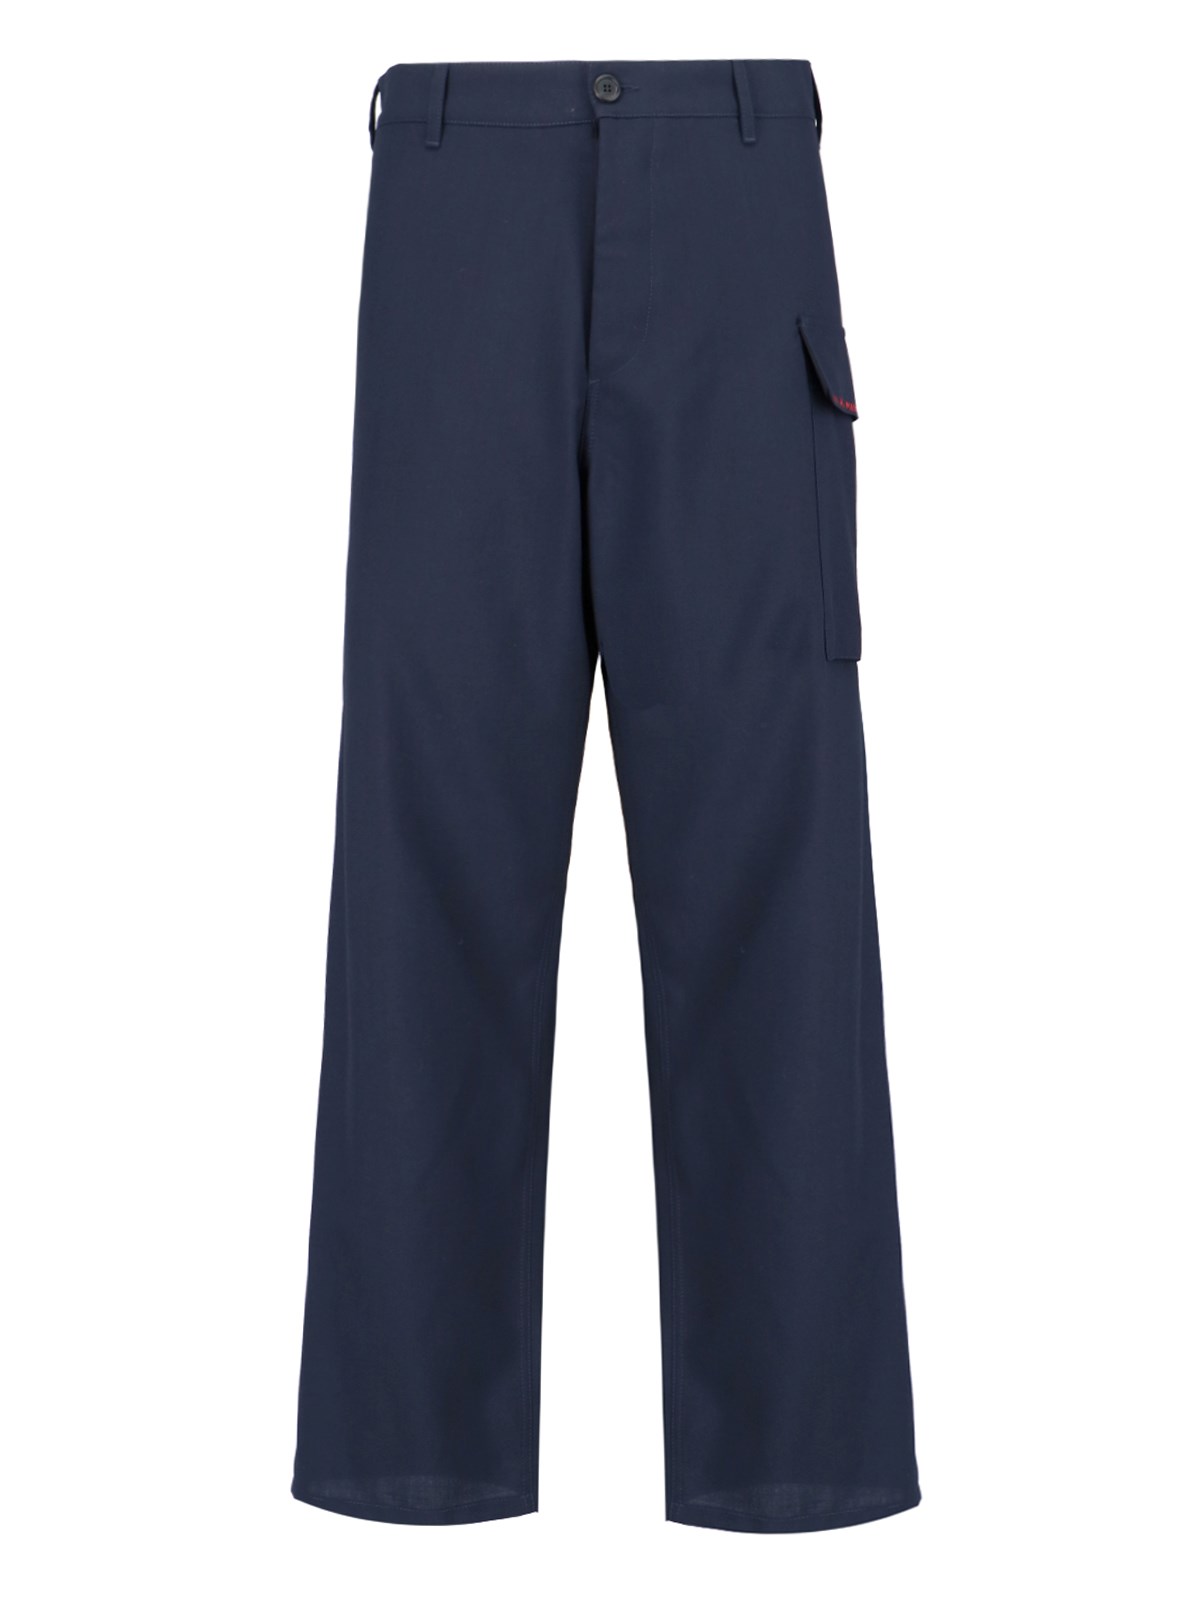 Marni Virgin Wool Navy Blue Cargo Pant